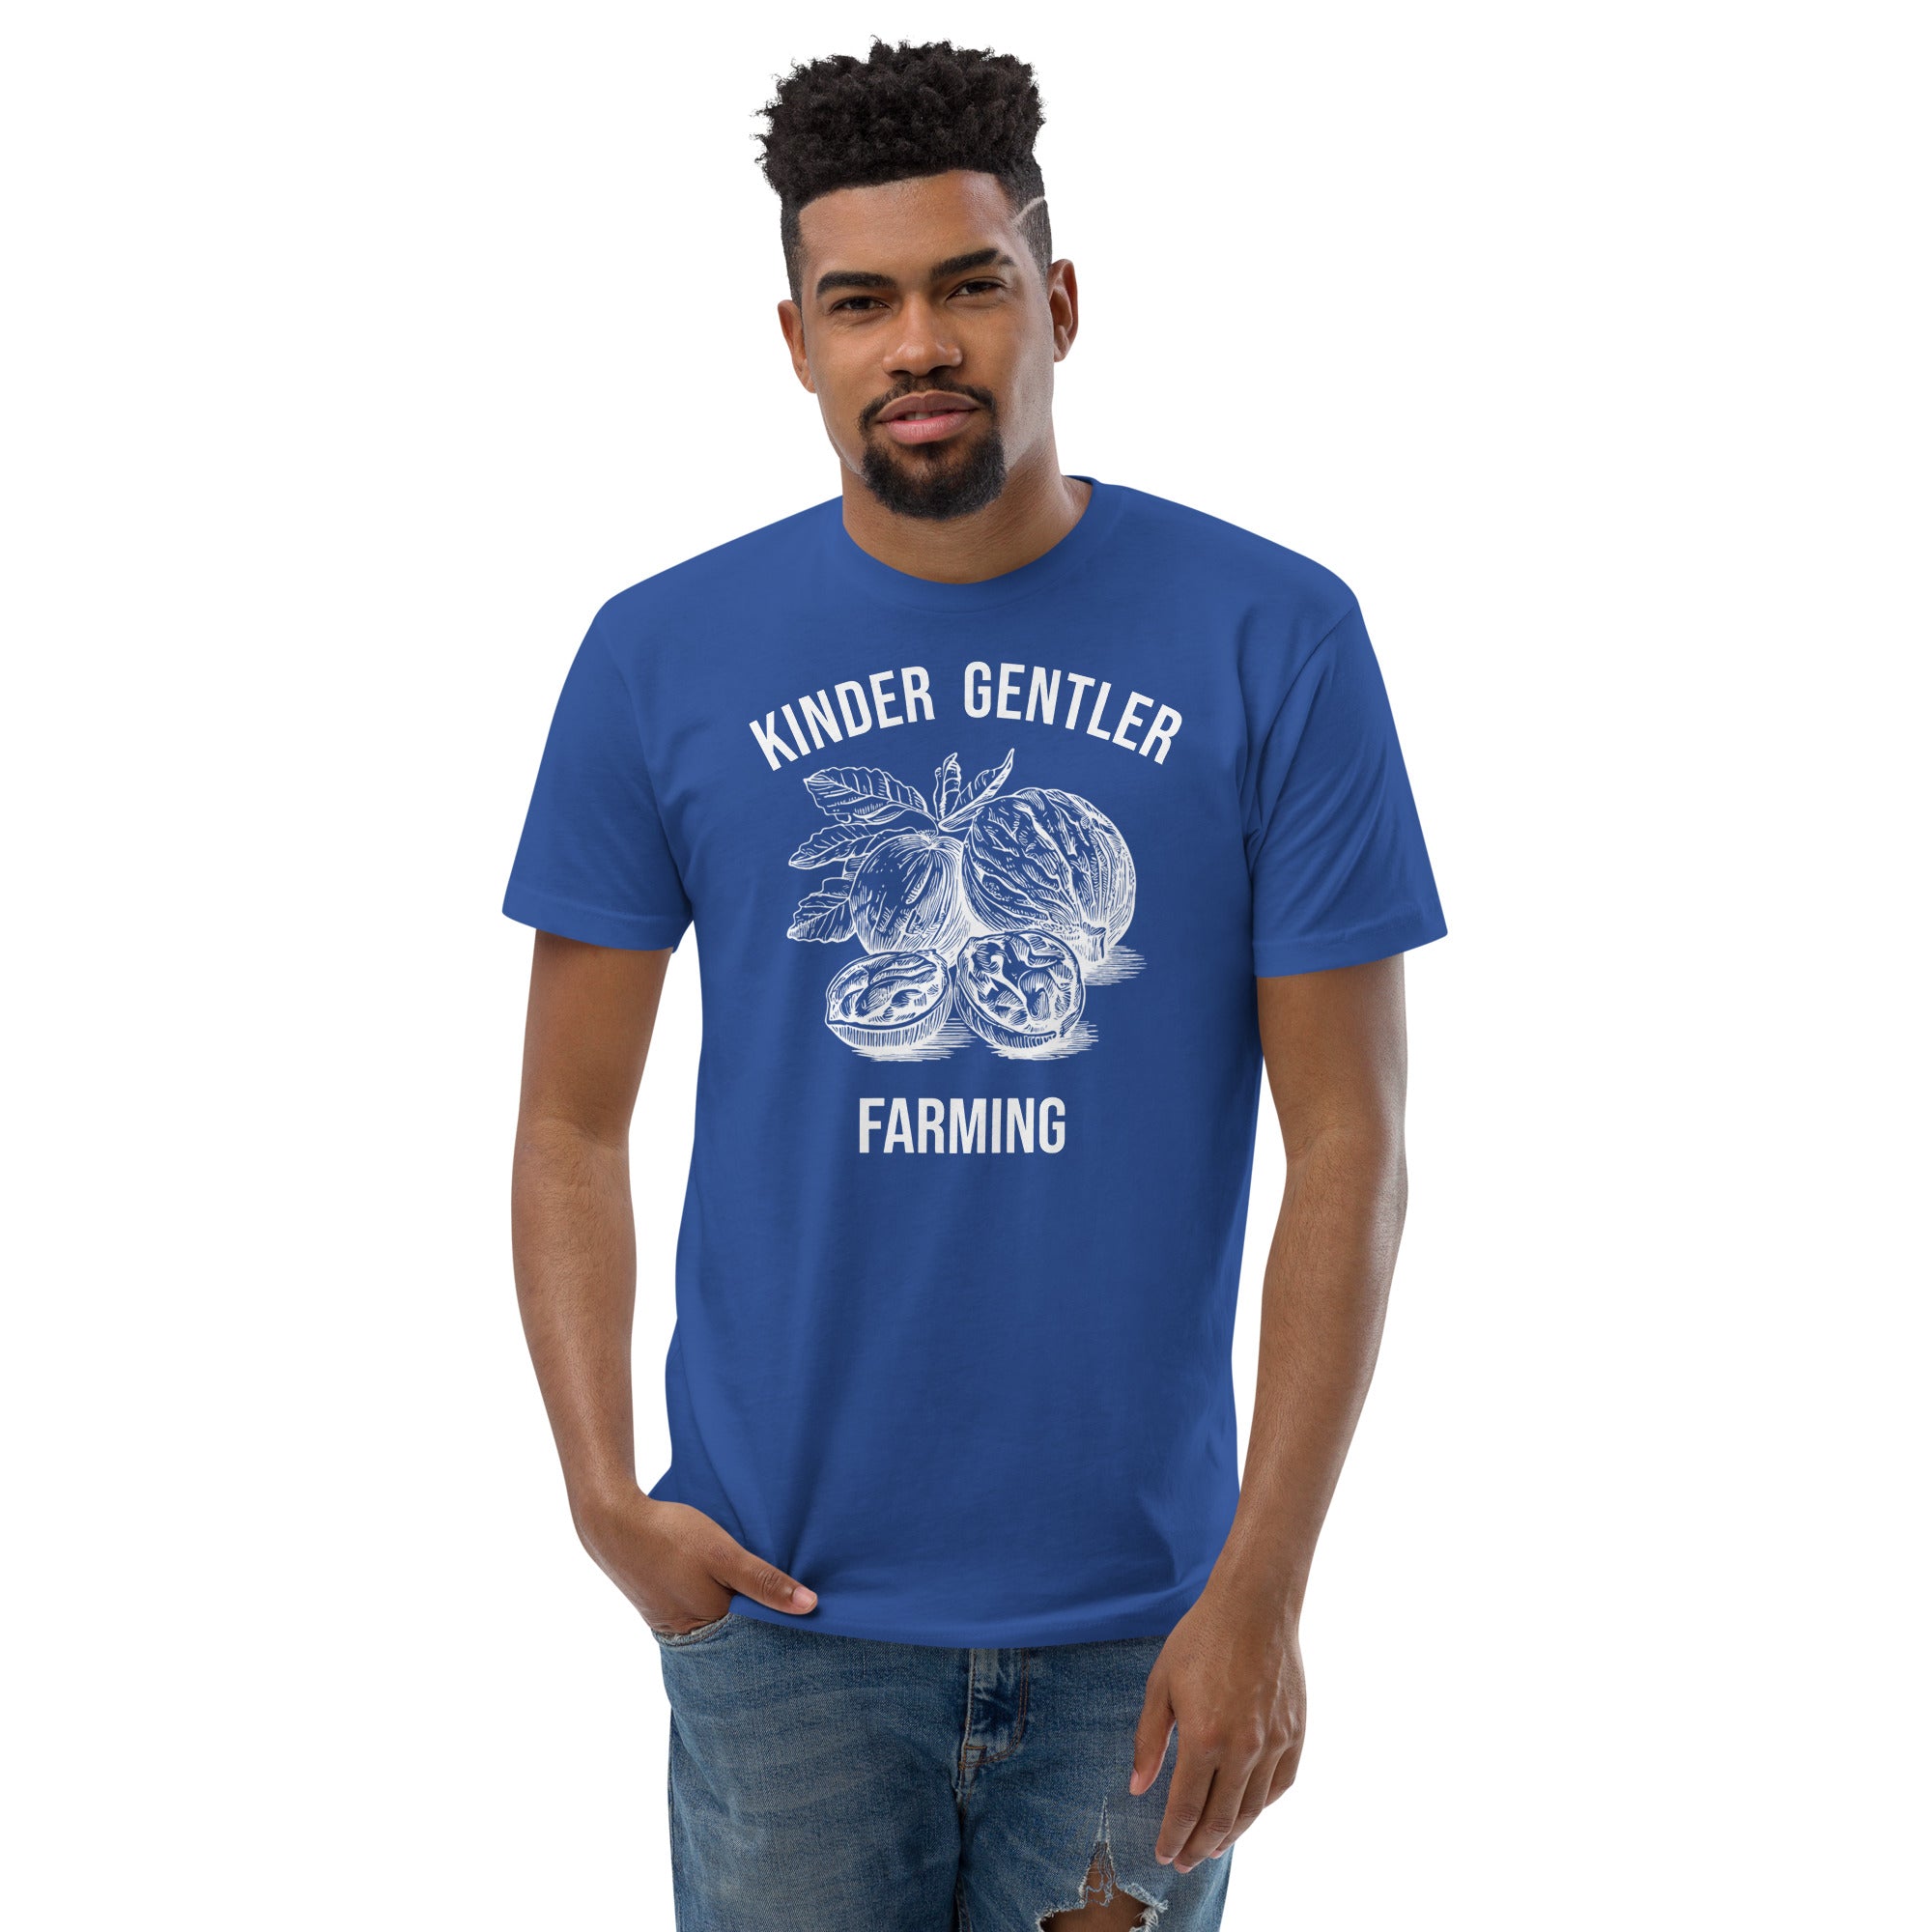 Kinder, gentler farming (short sleeve T-shirt)